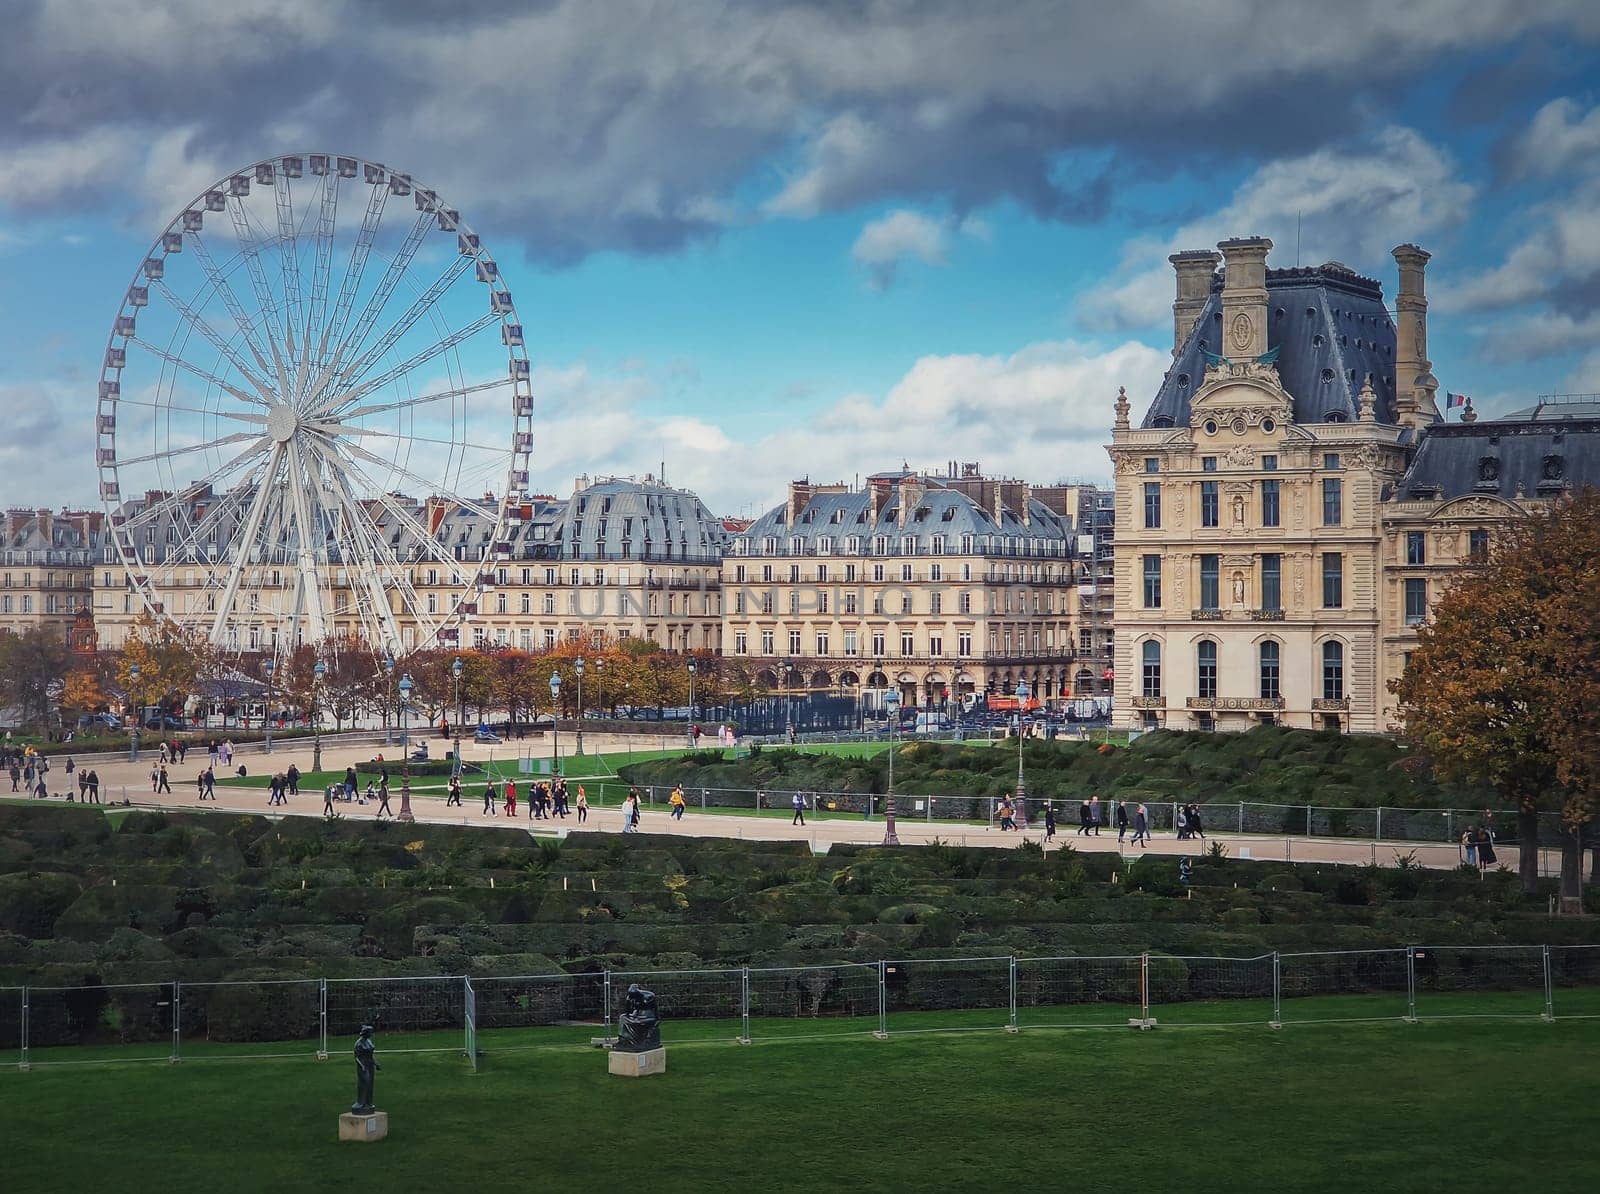 Cityscape view to the Grande Roue de Paris ferris wheel next to Louvre museum building and parisian houses, France by psychoshadow